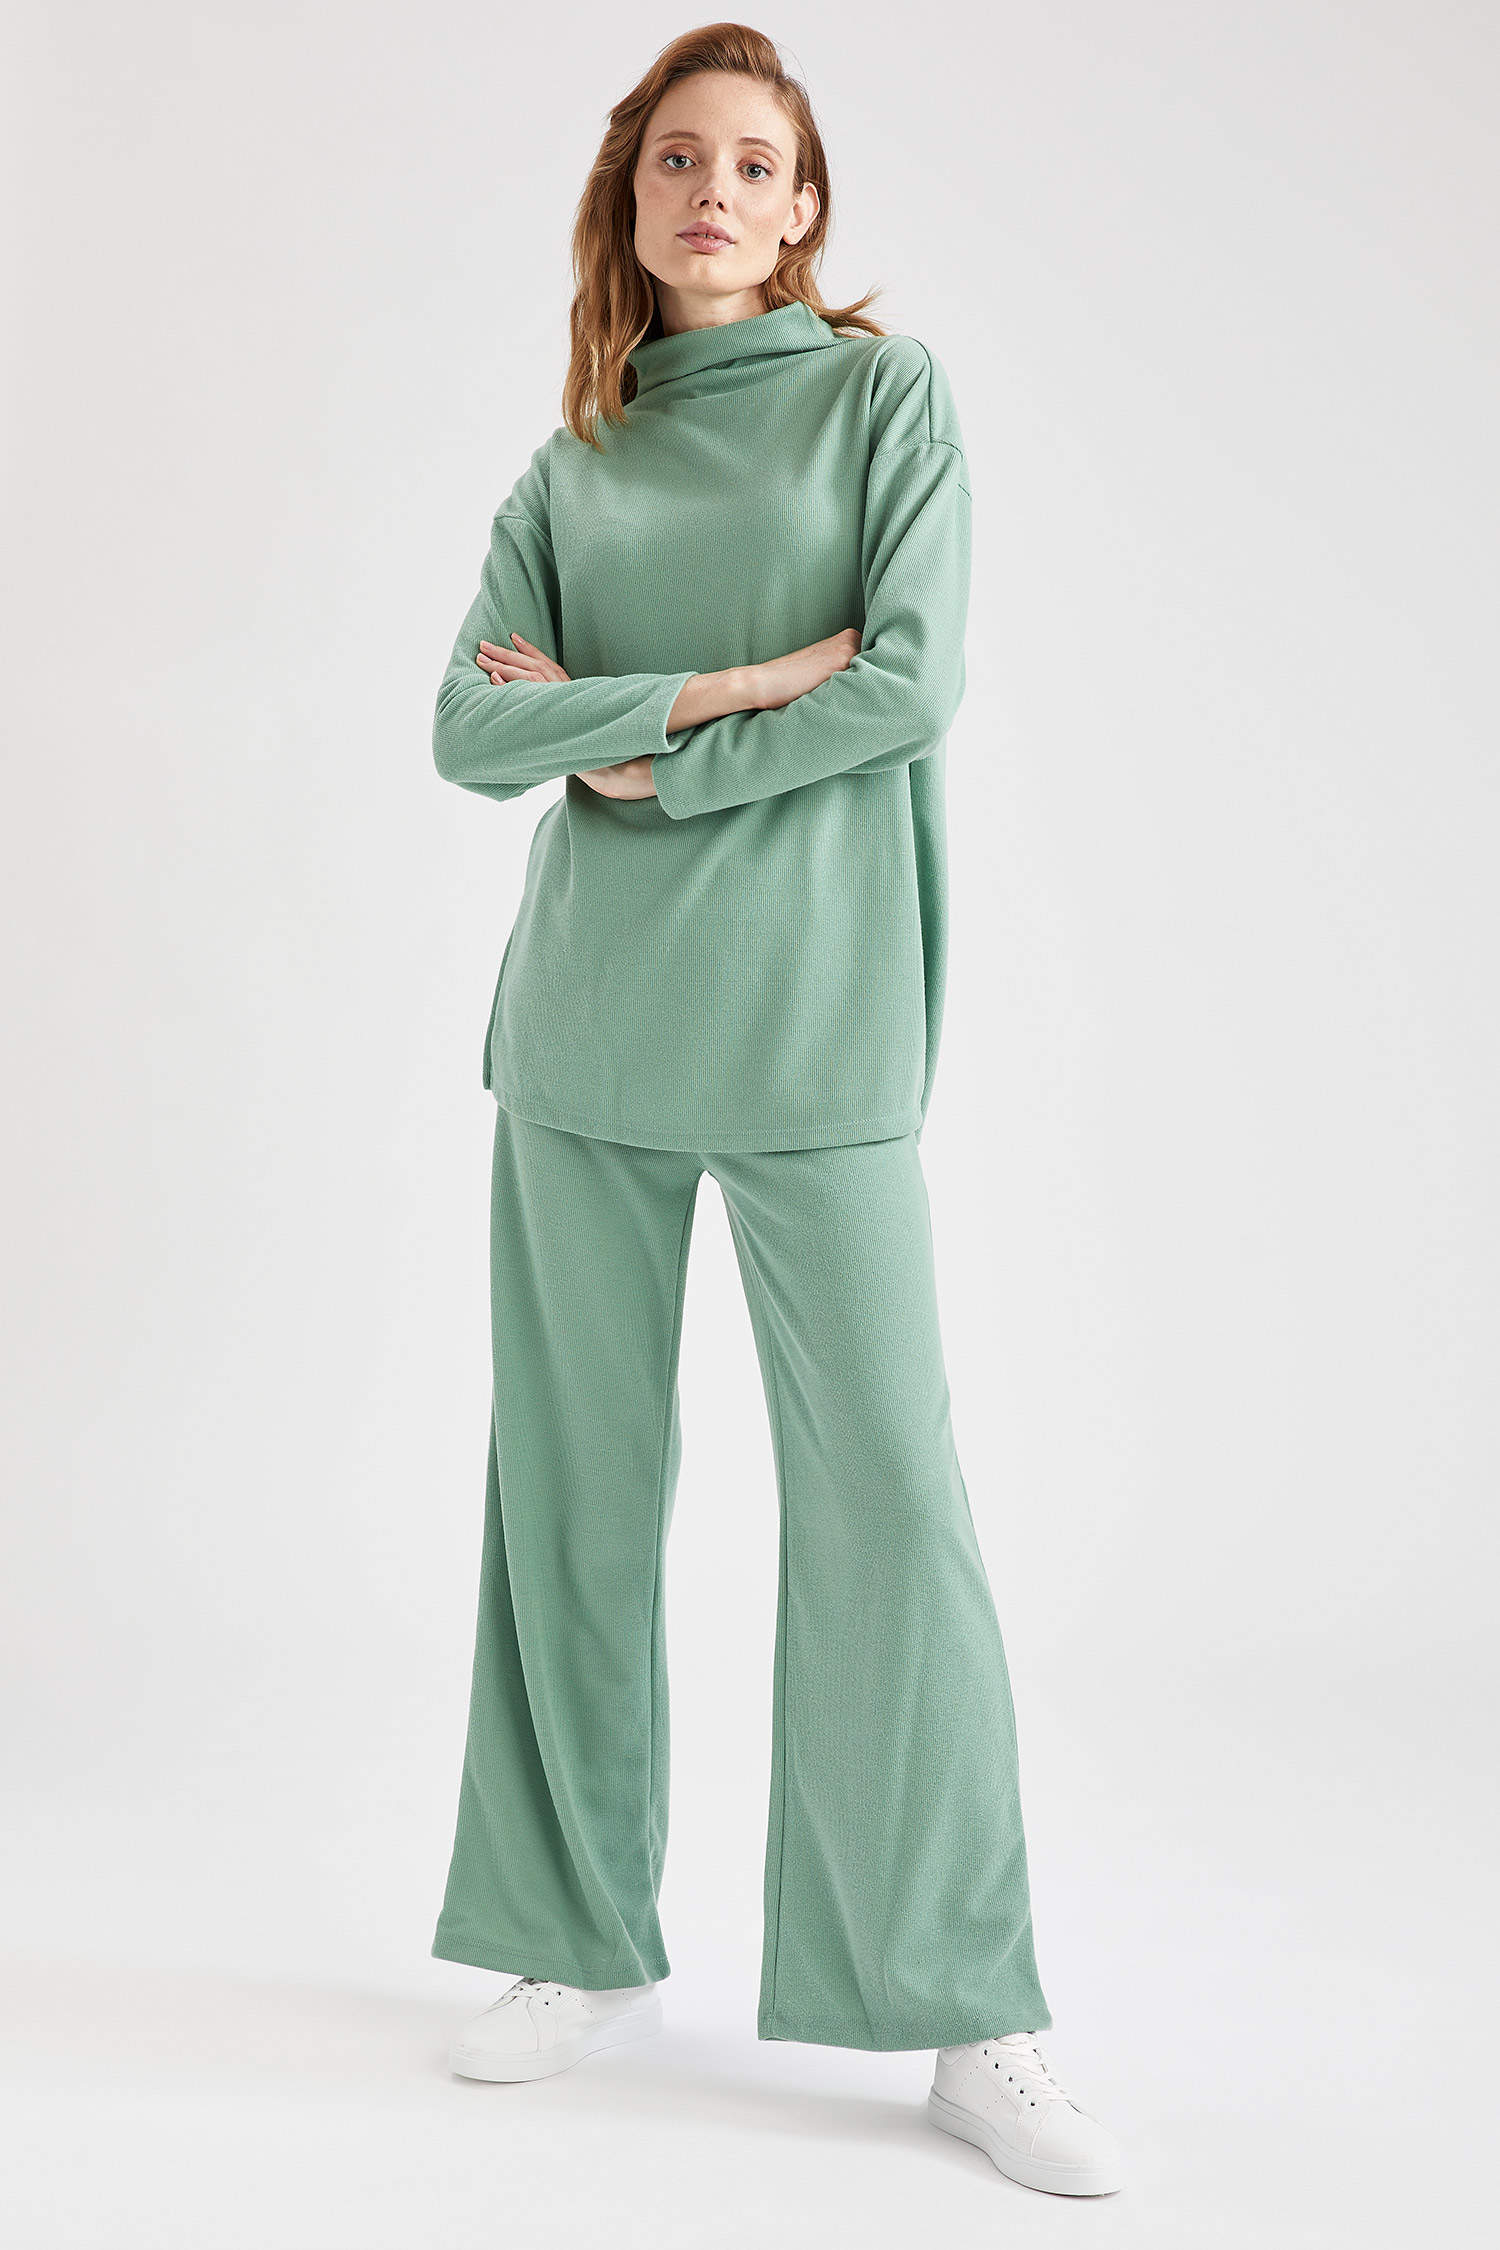 Turquoise WOMAN Relax Fit Turtleneck Sweatshirt 1807520 | DeFacto